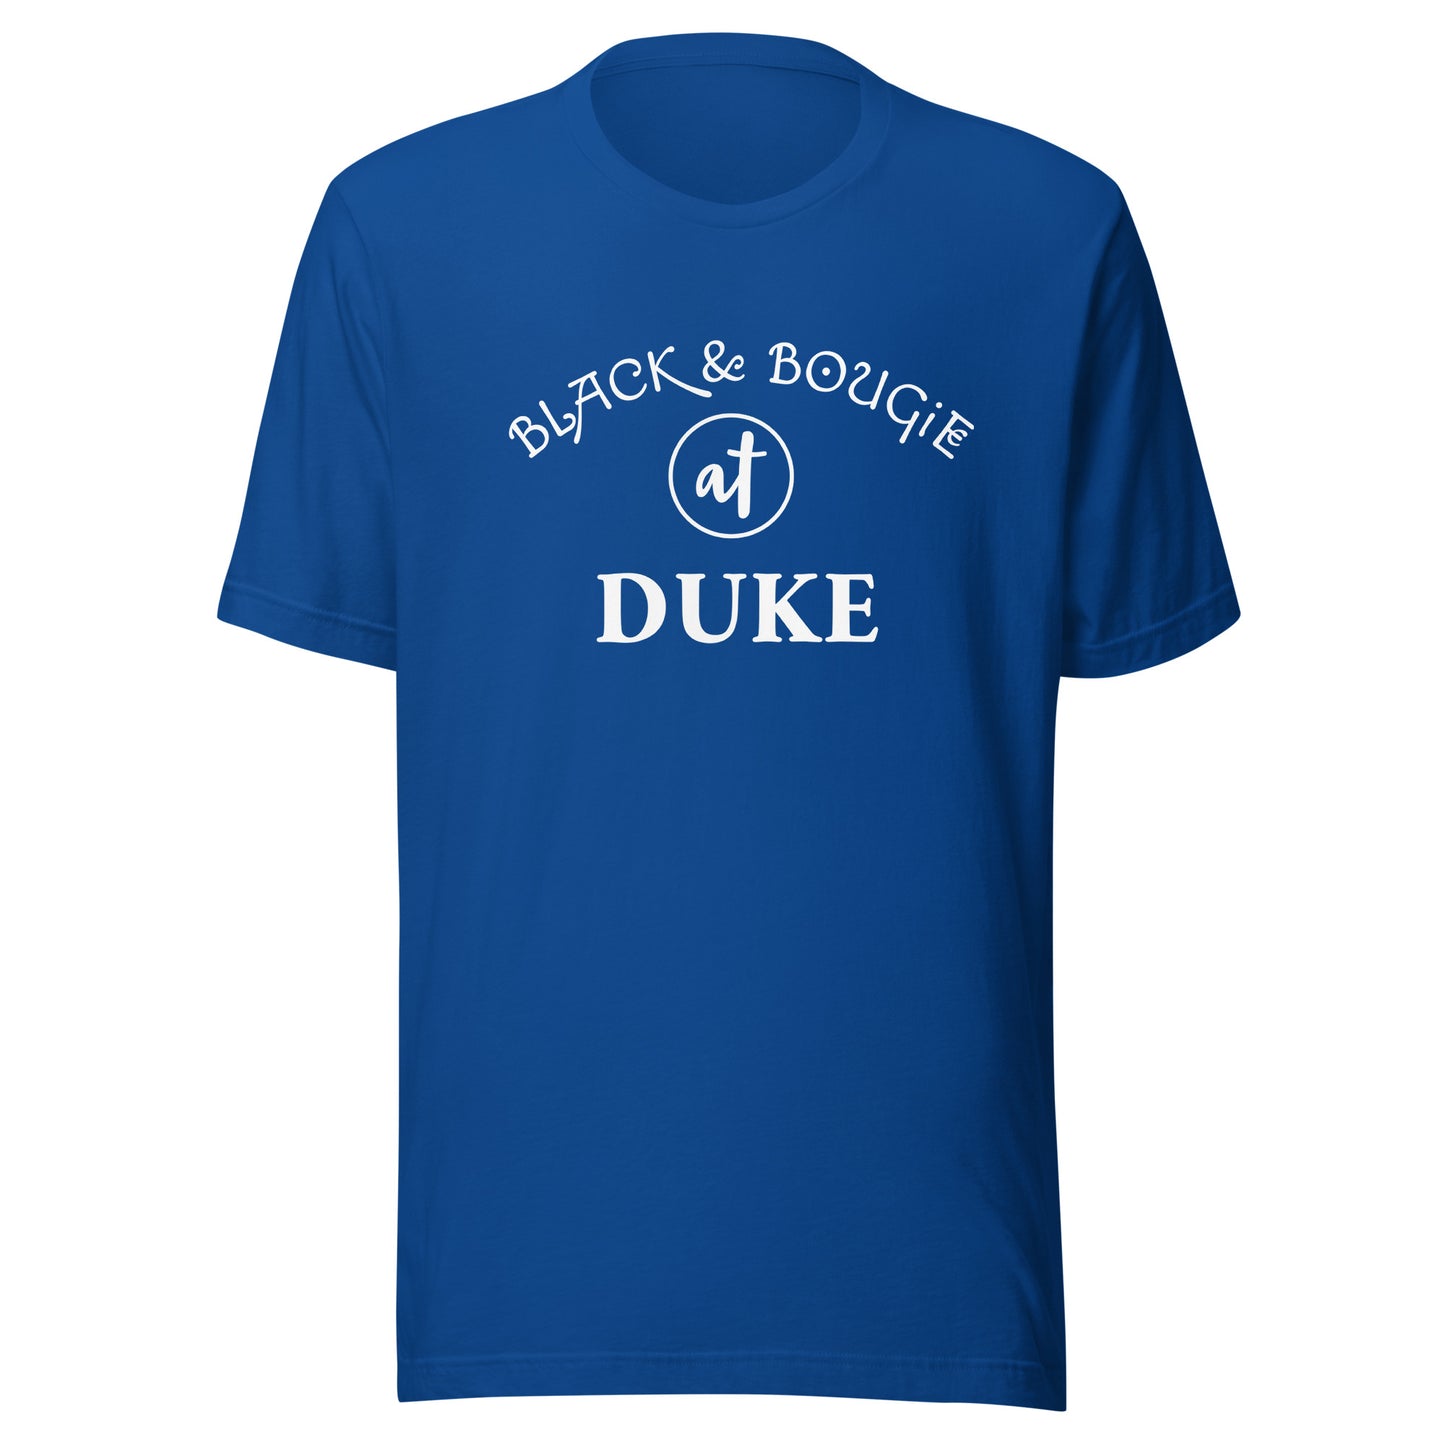 Black & Bougie at Duke Unisex t-shirt